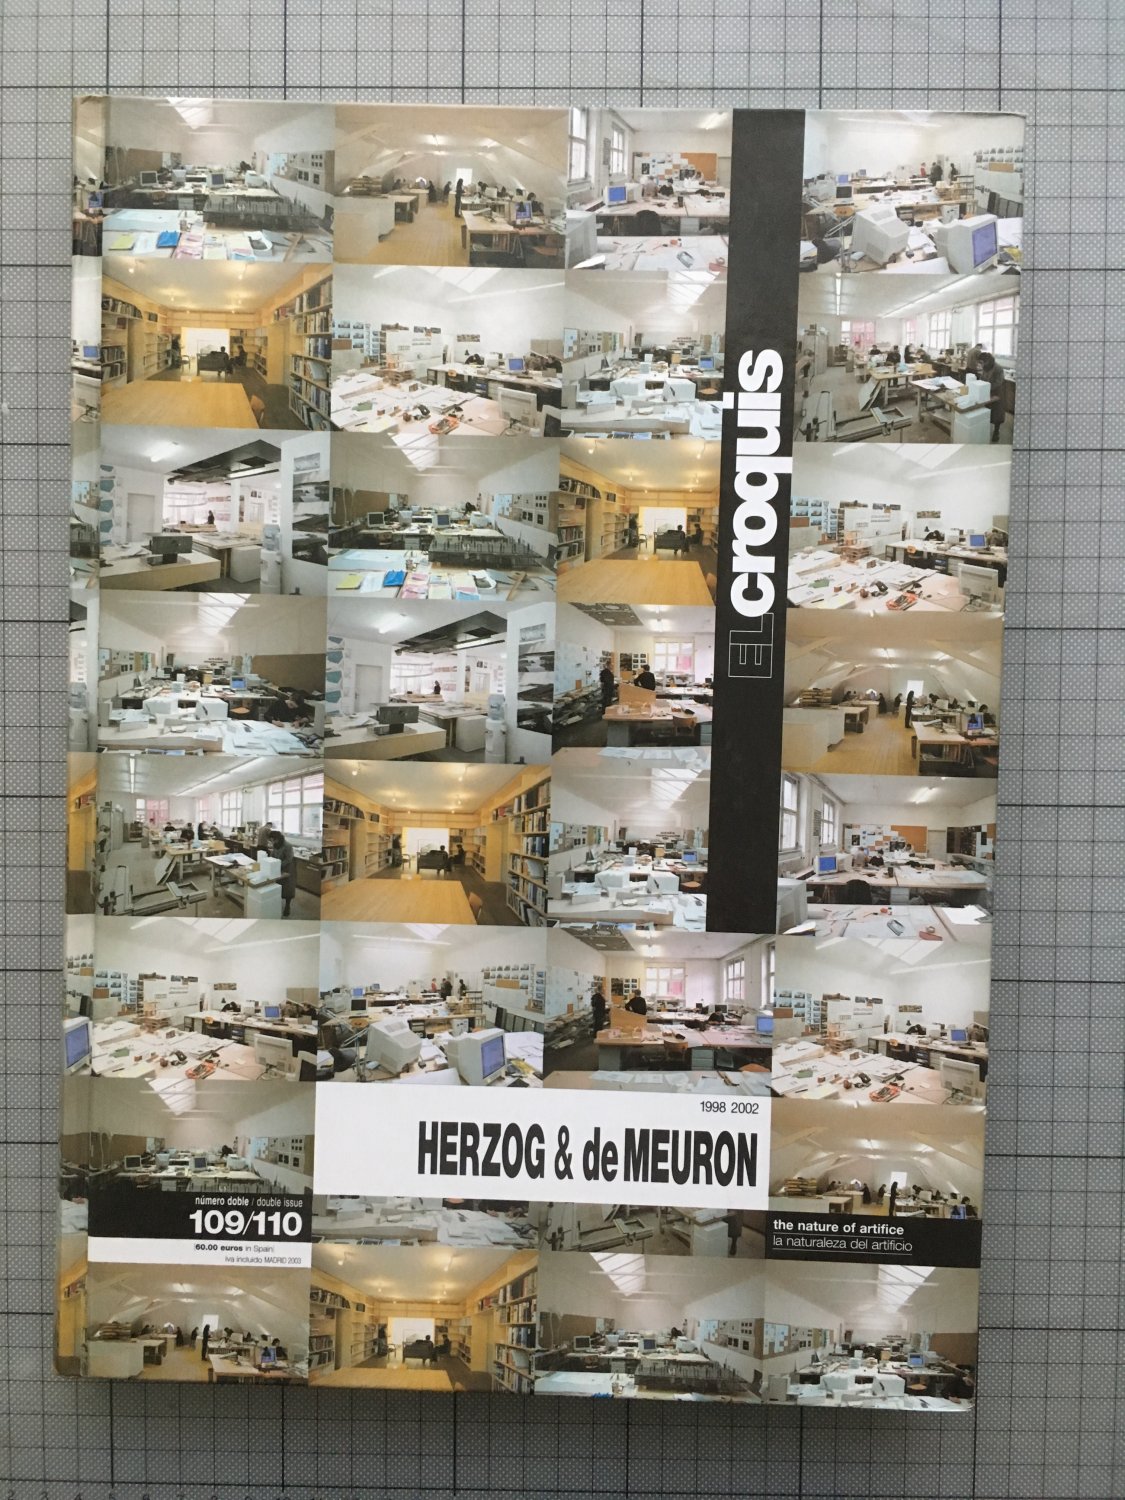 Herzog & de Meuron 1998 -2002 El Croquis 109/110“ – Buch gebraucht 